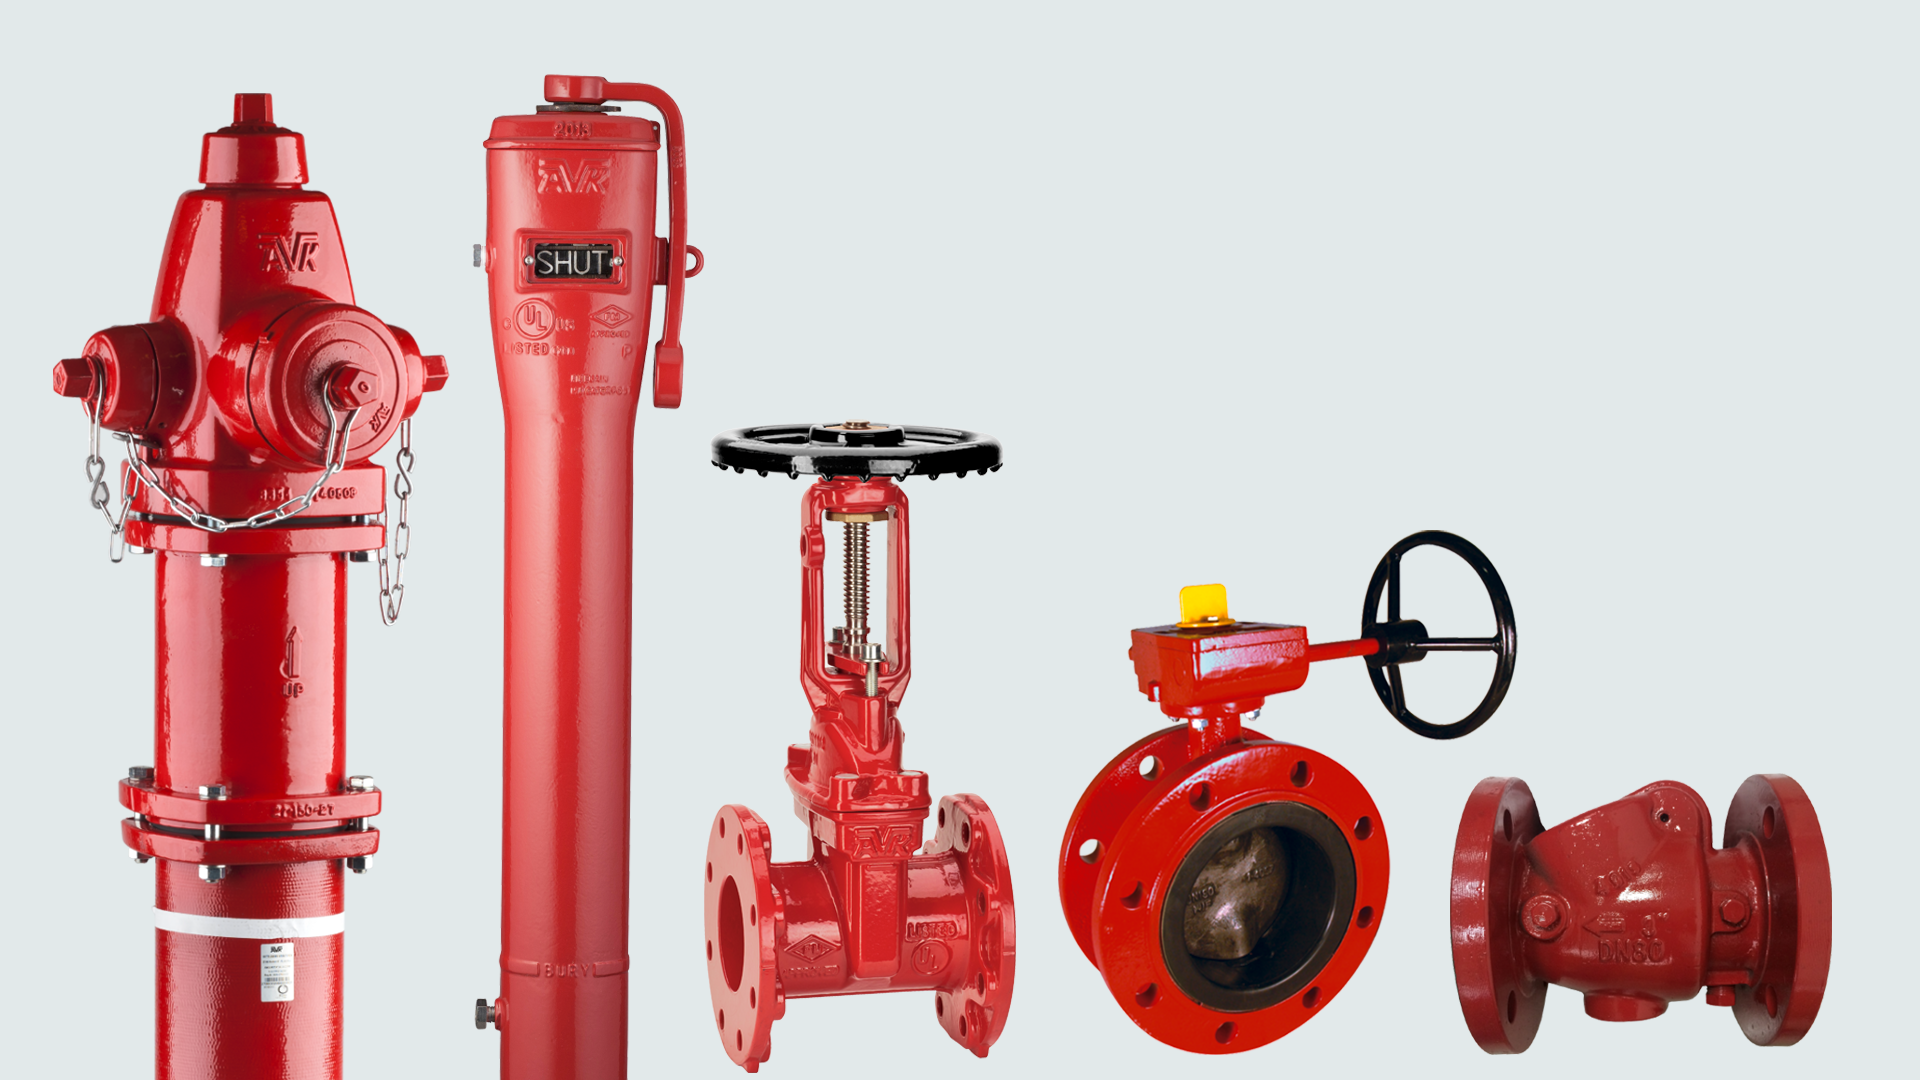 AVK valves for fire protection